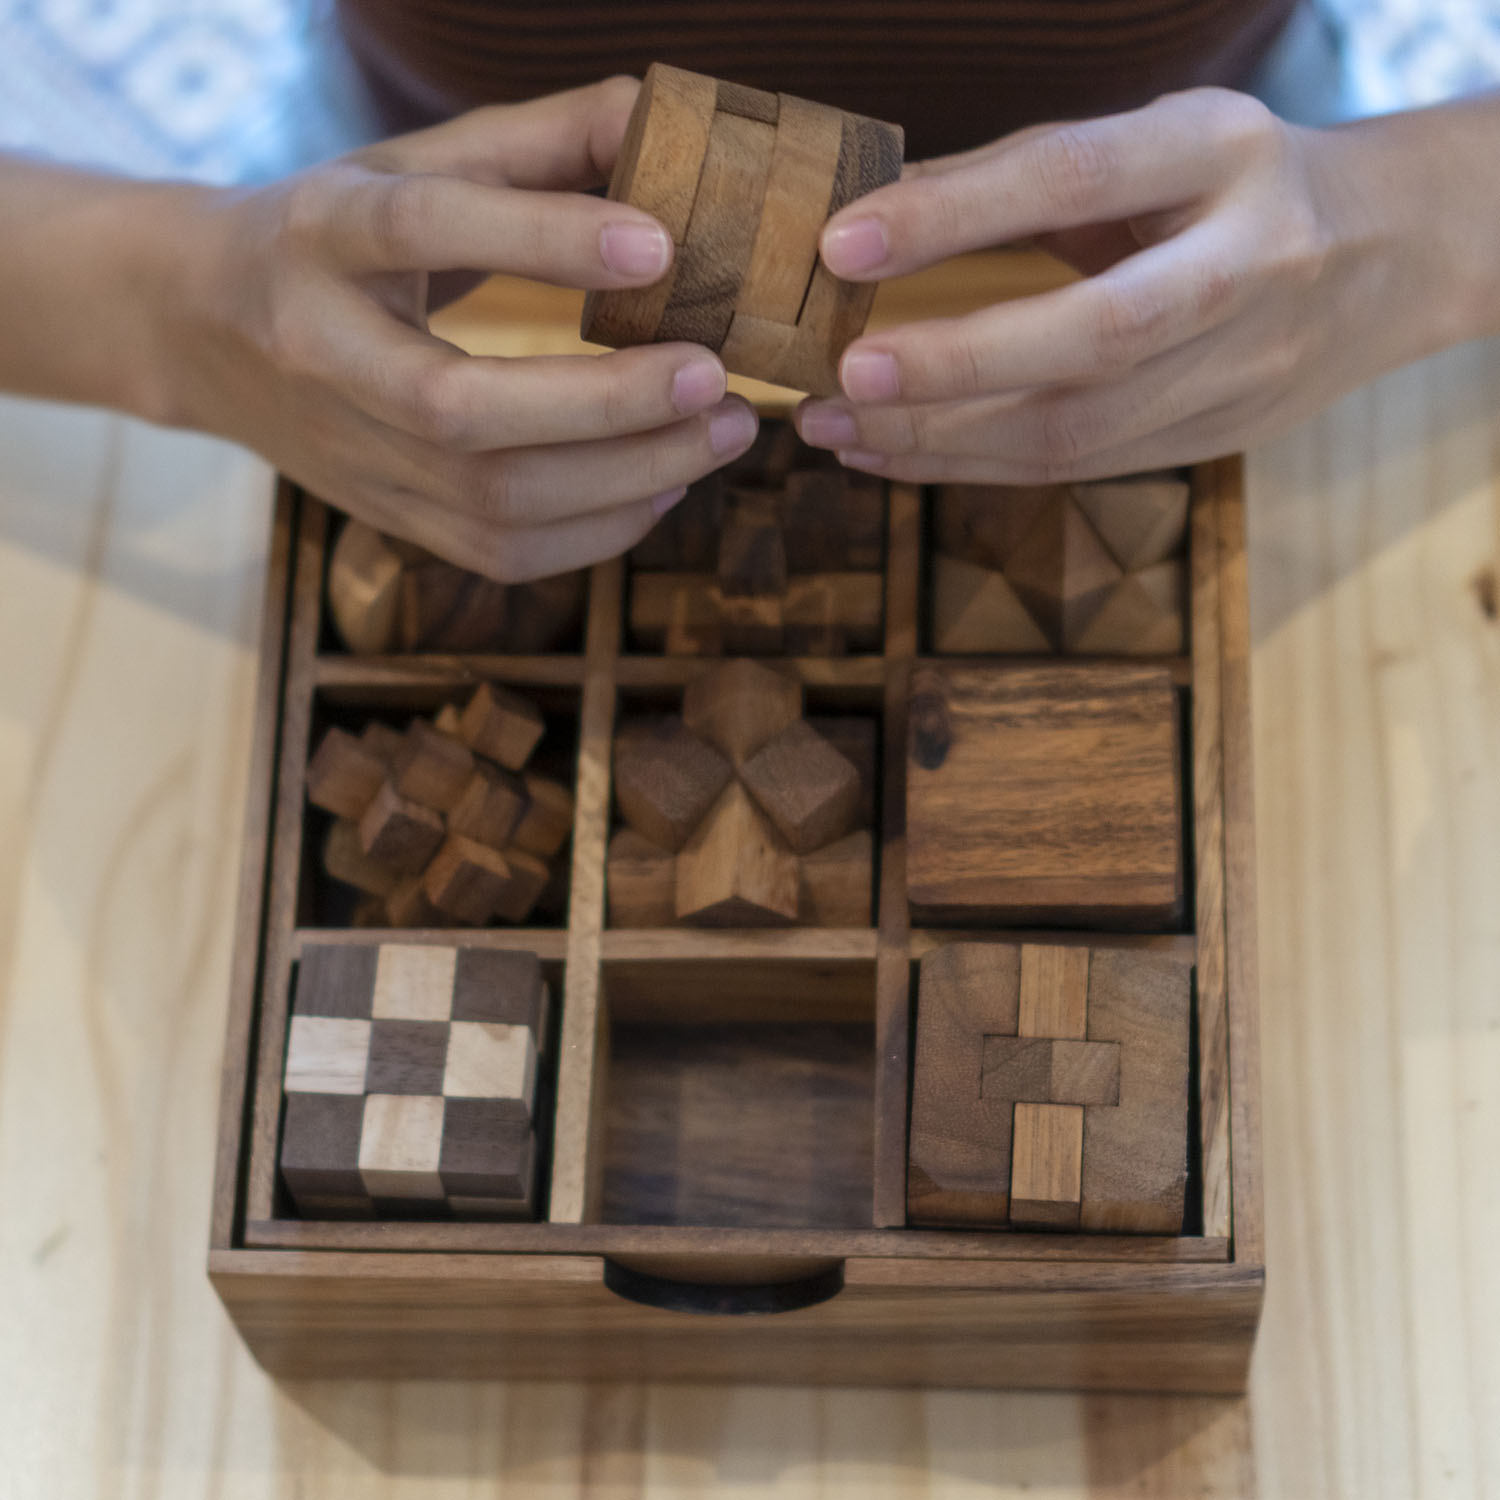 9-Piece Wooden Puzzle - Set of 12 with Storage Shelf